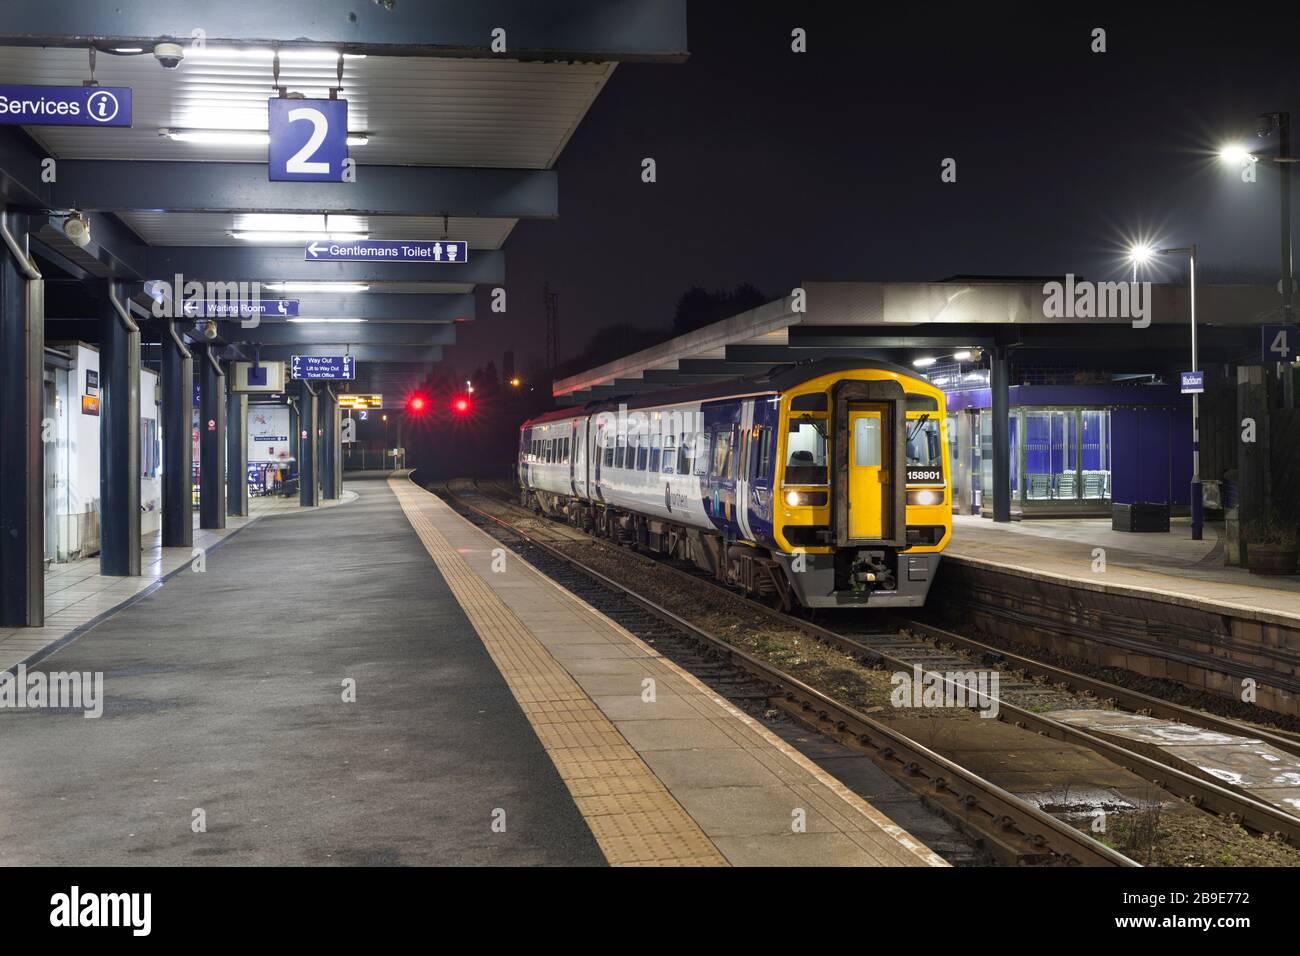 Northern rail class 158 sprinter train at Blackburn railway station at night Stock Photo